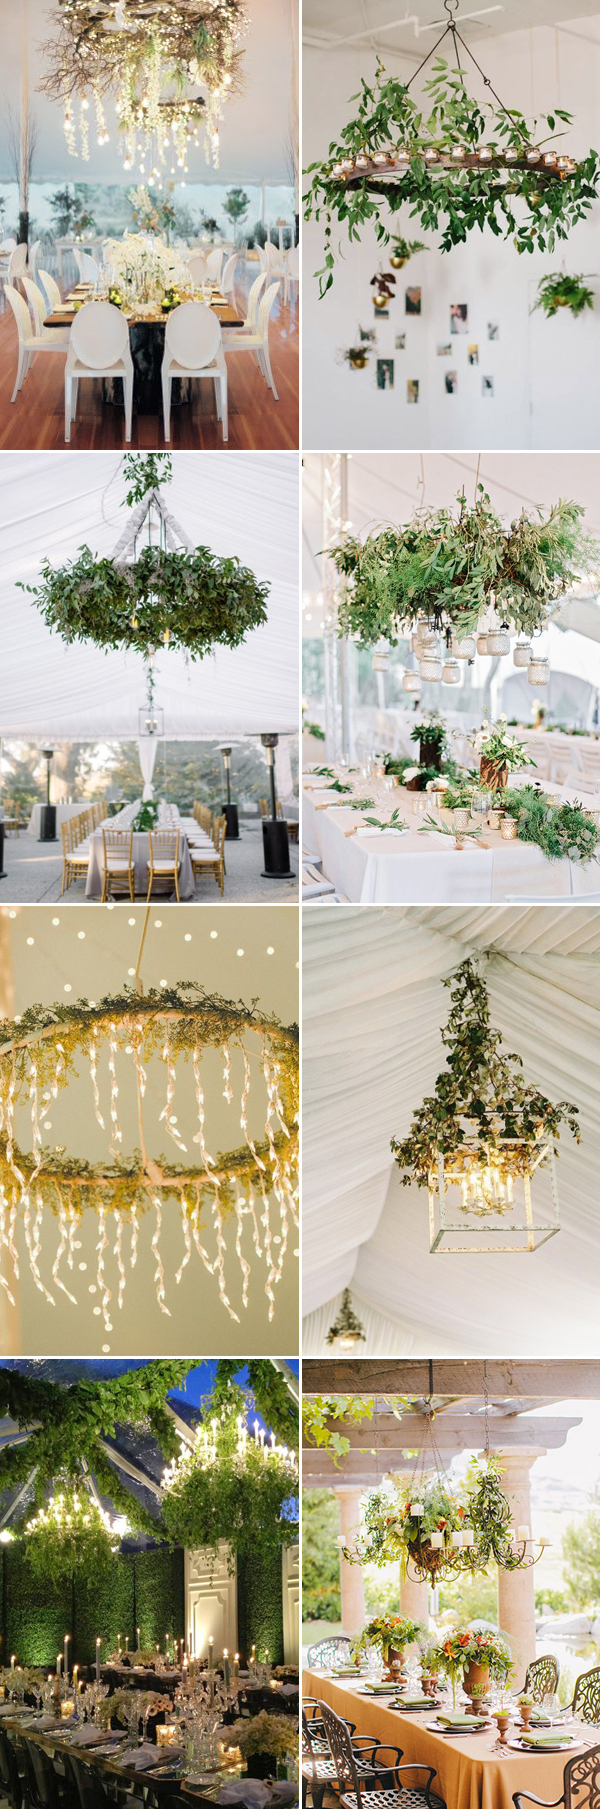 green wedding decor ideas- Chandelier with Greenery